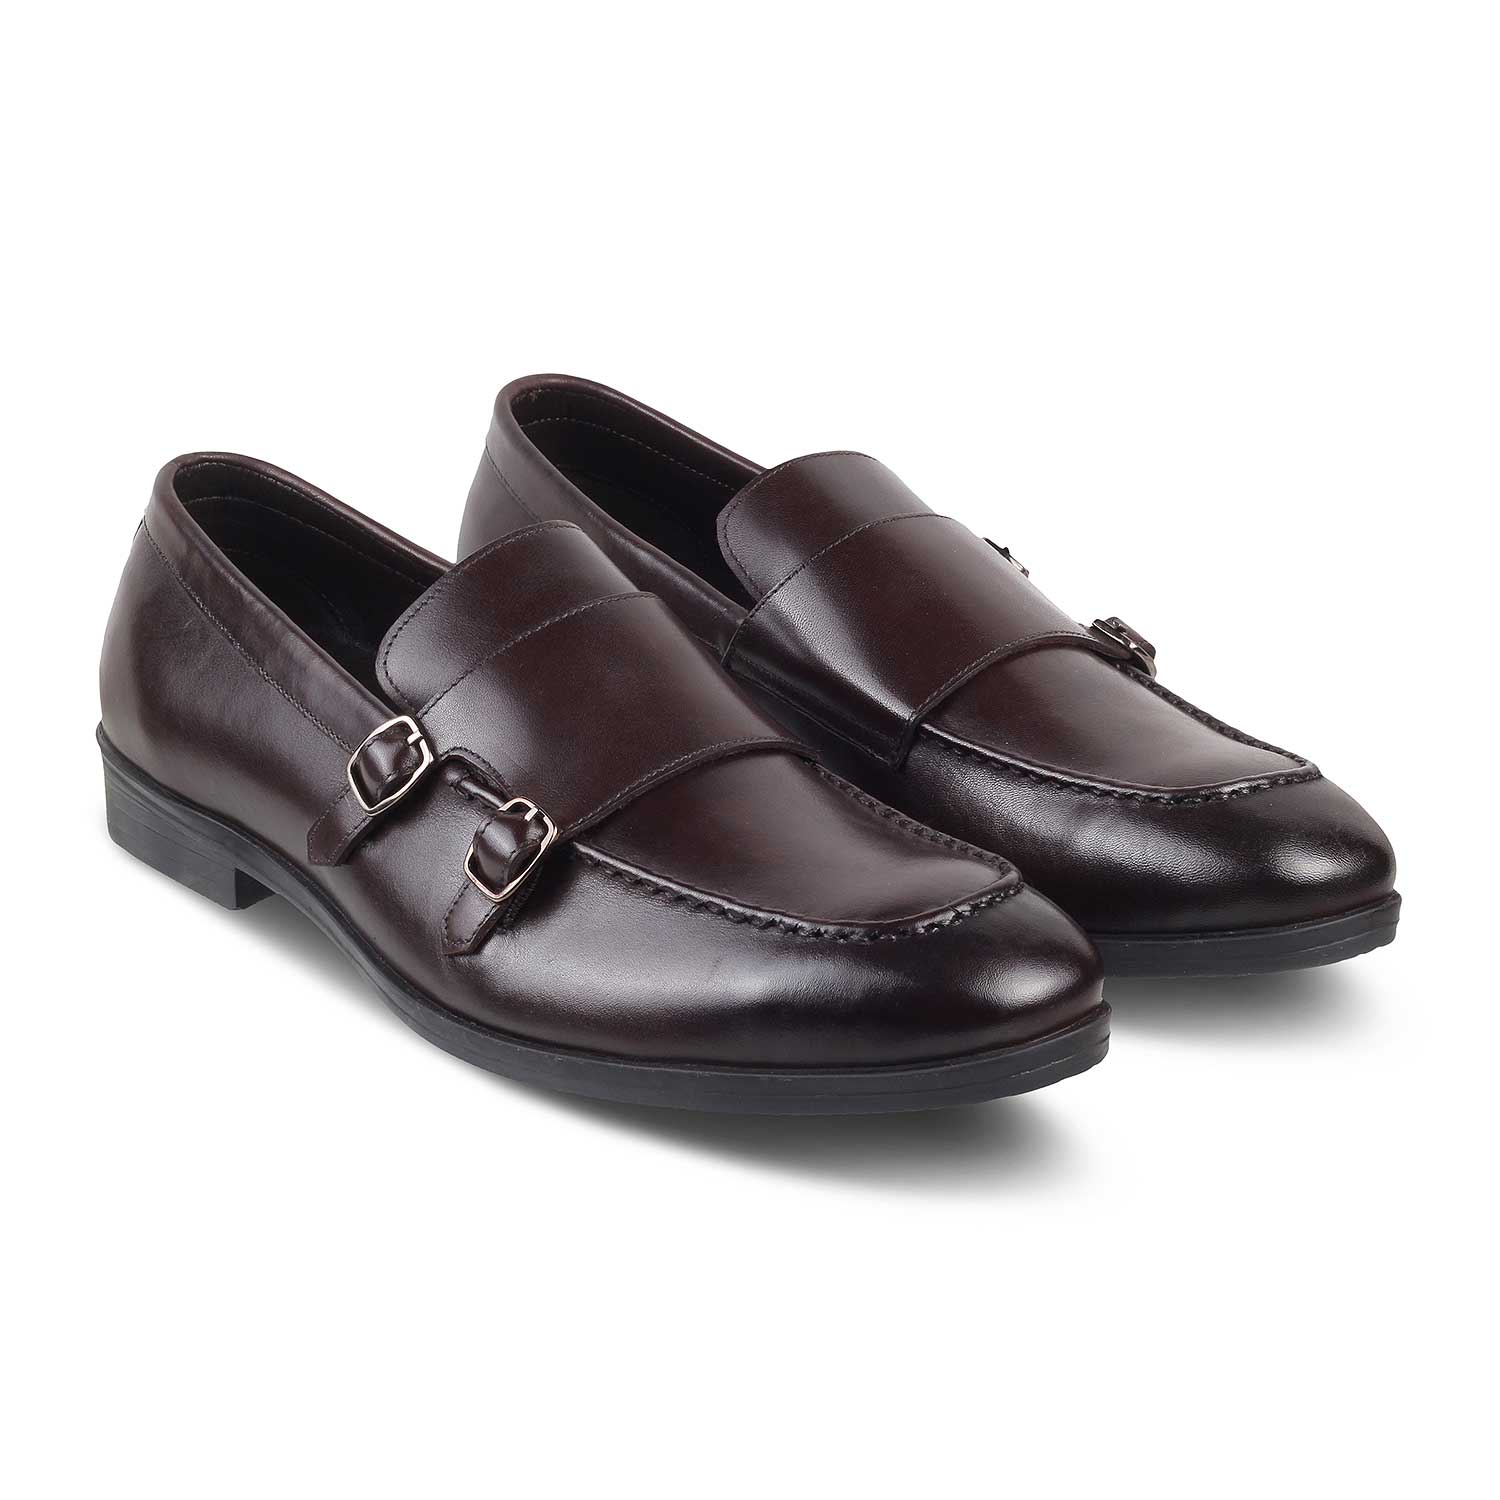 Bond Brown Men's Double Monk Shoes Online at Tresmode.com